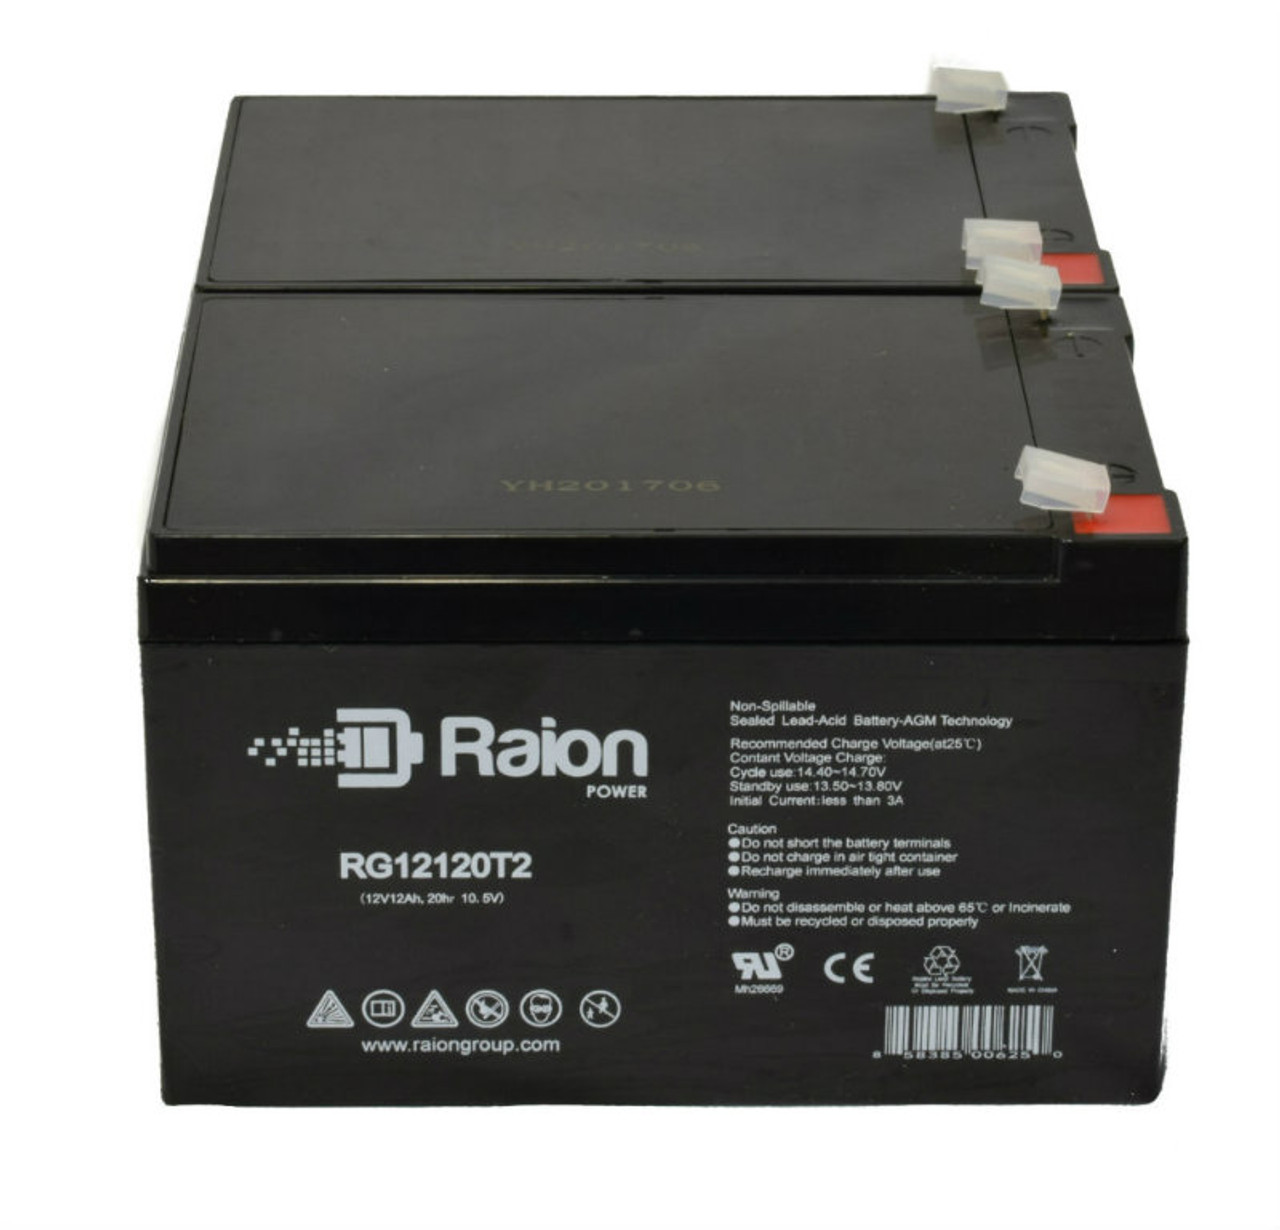 Raion Power 12V 12Ah Non-Spillable Compatible Replacement Battery for Haze Batteries HZS12-12 - (2 Pack)